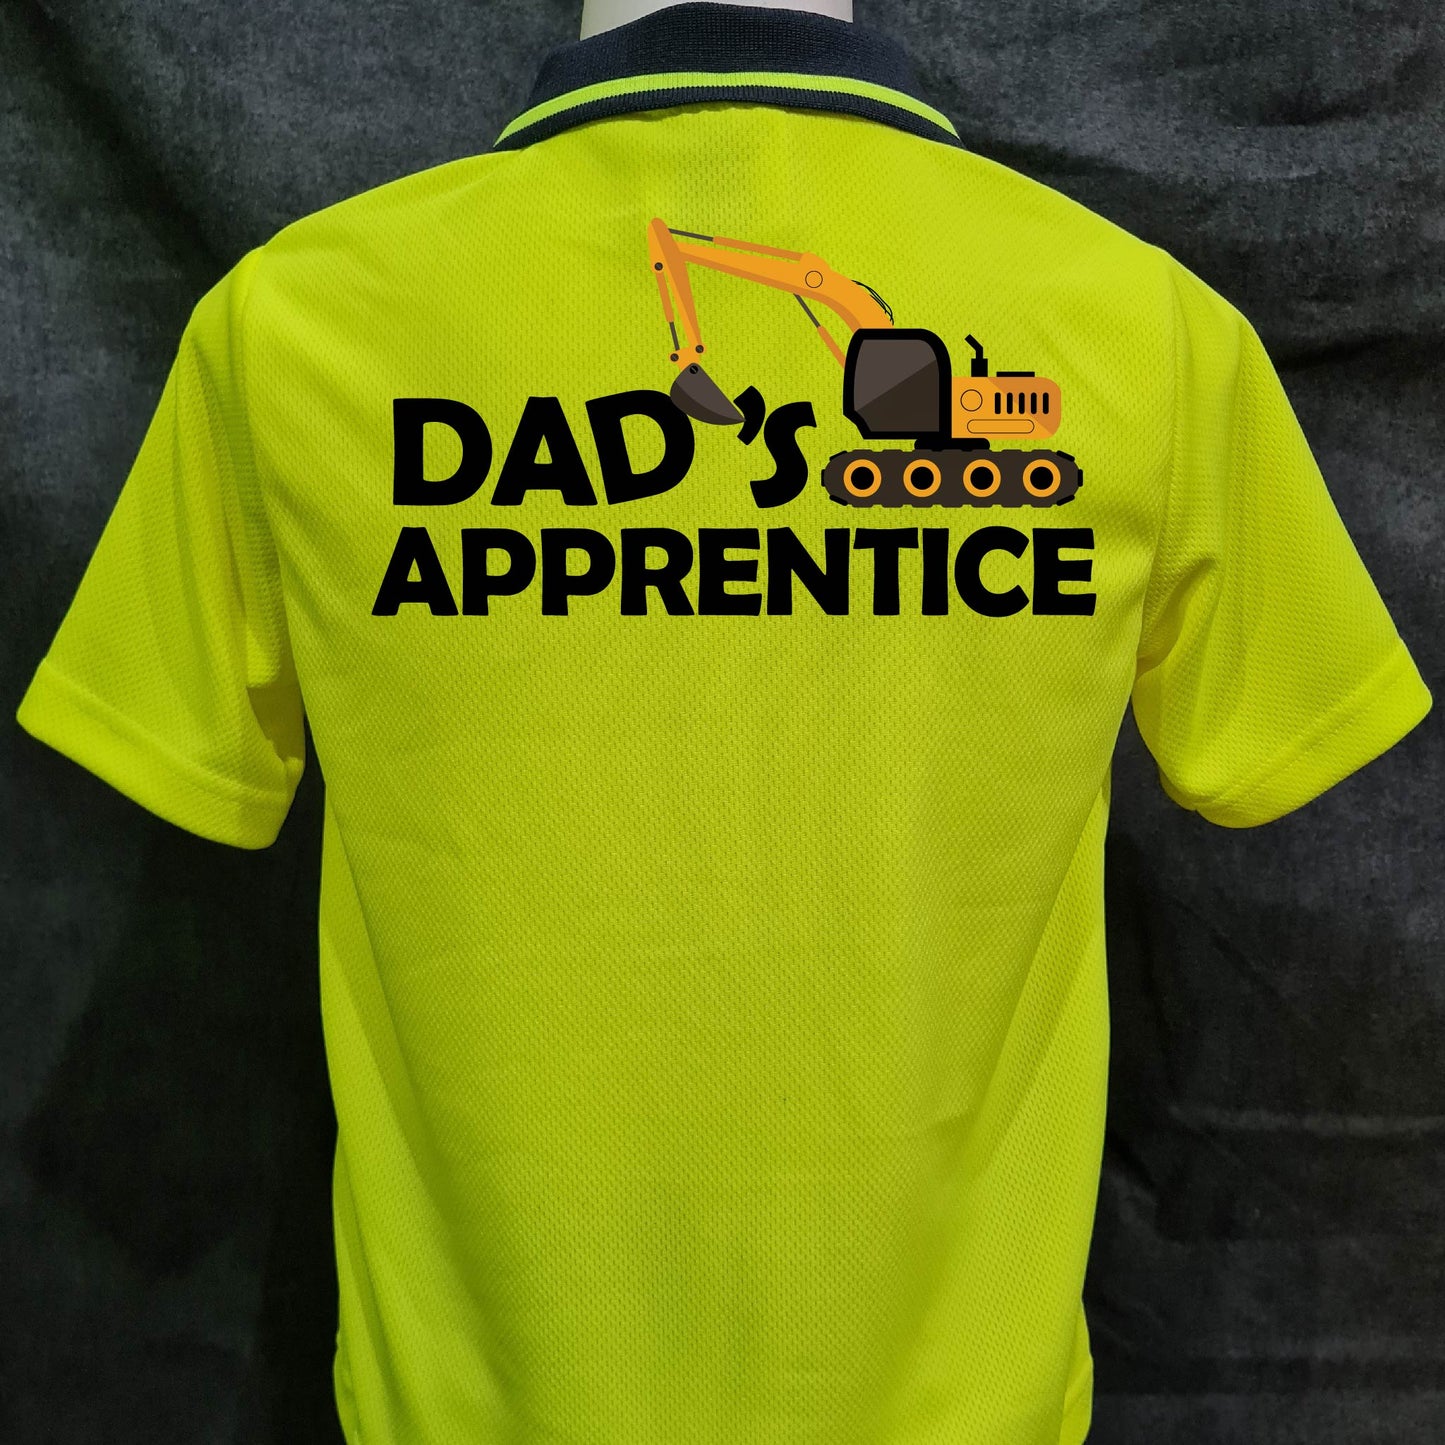 Dad's Apprentice